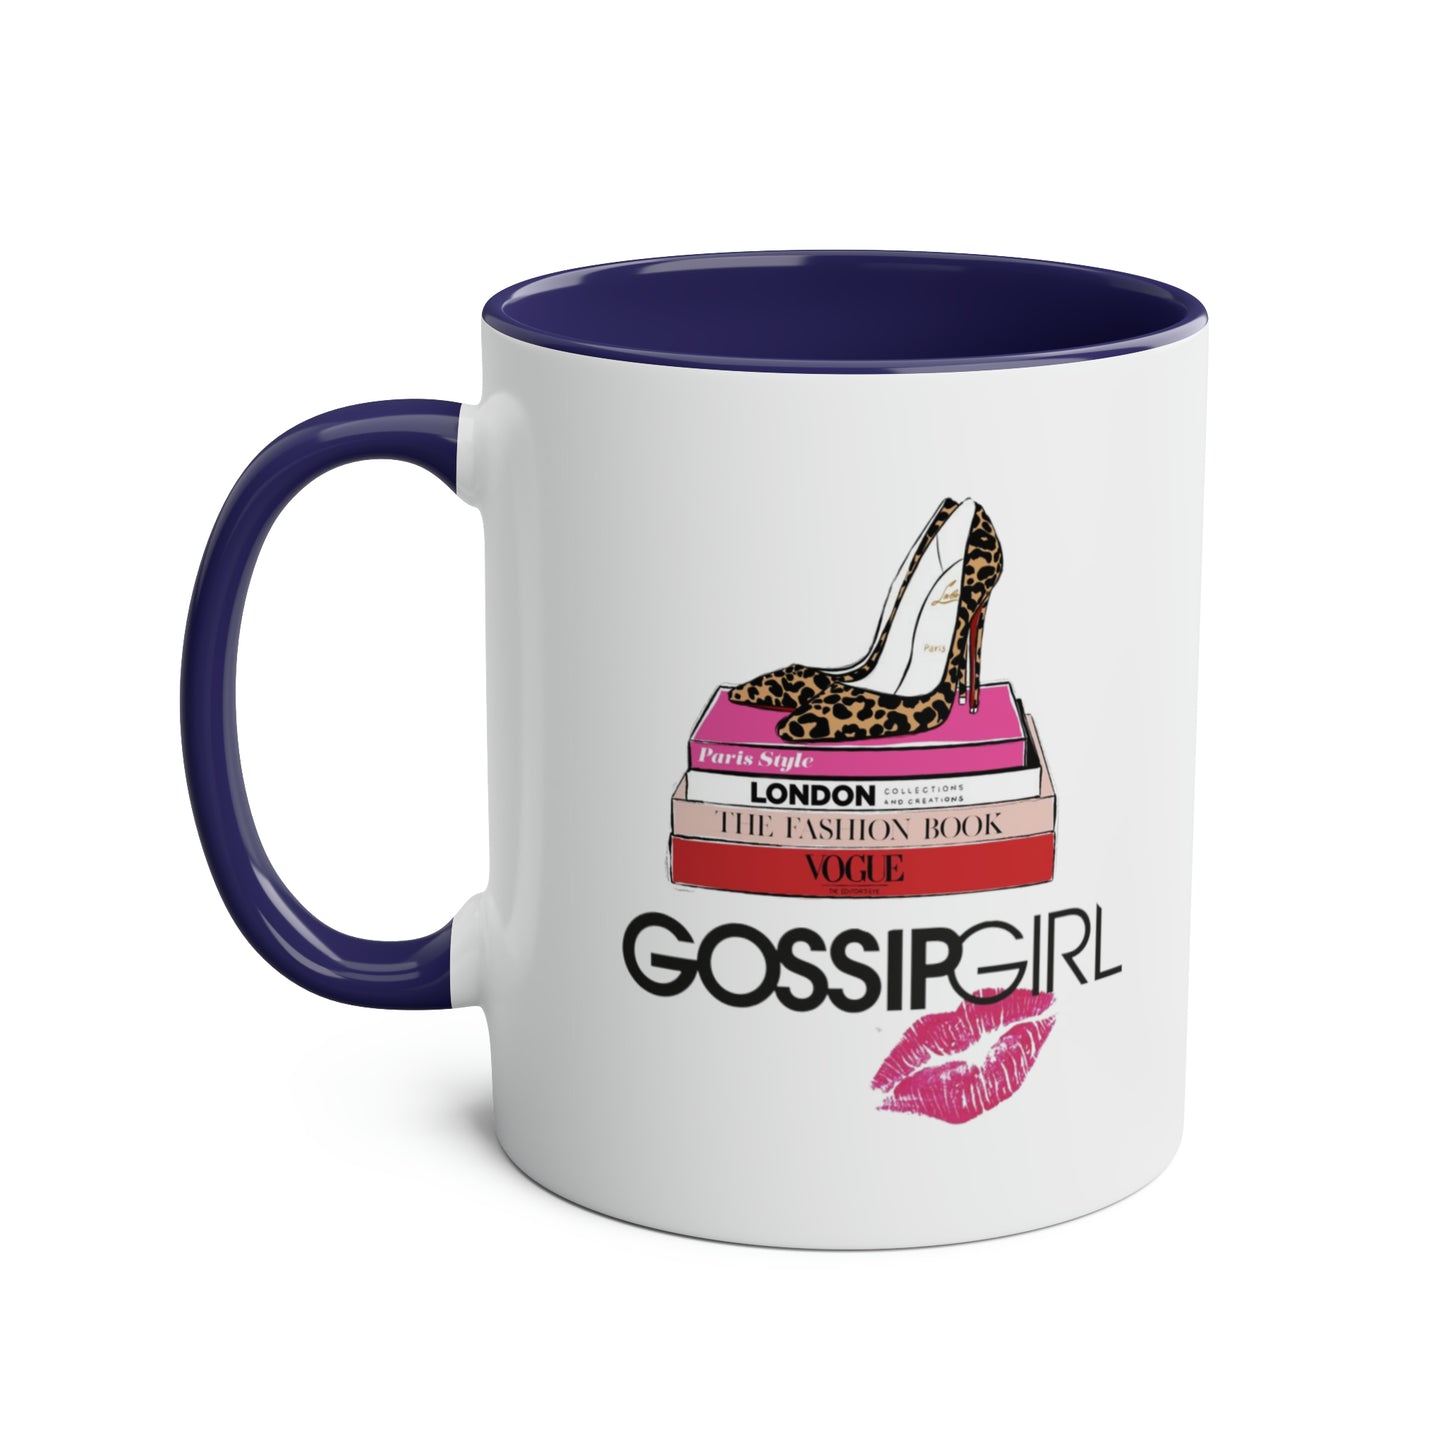 Gossip Girl Book Collage / Gossip Girl Mug